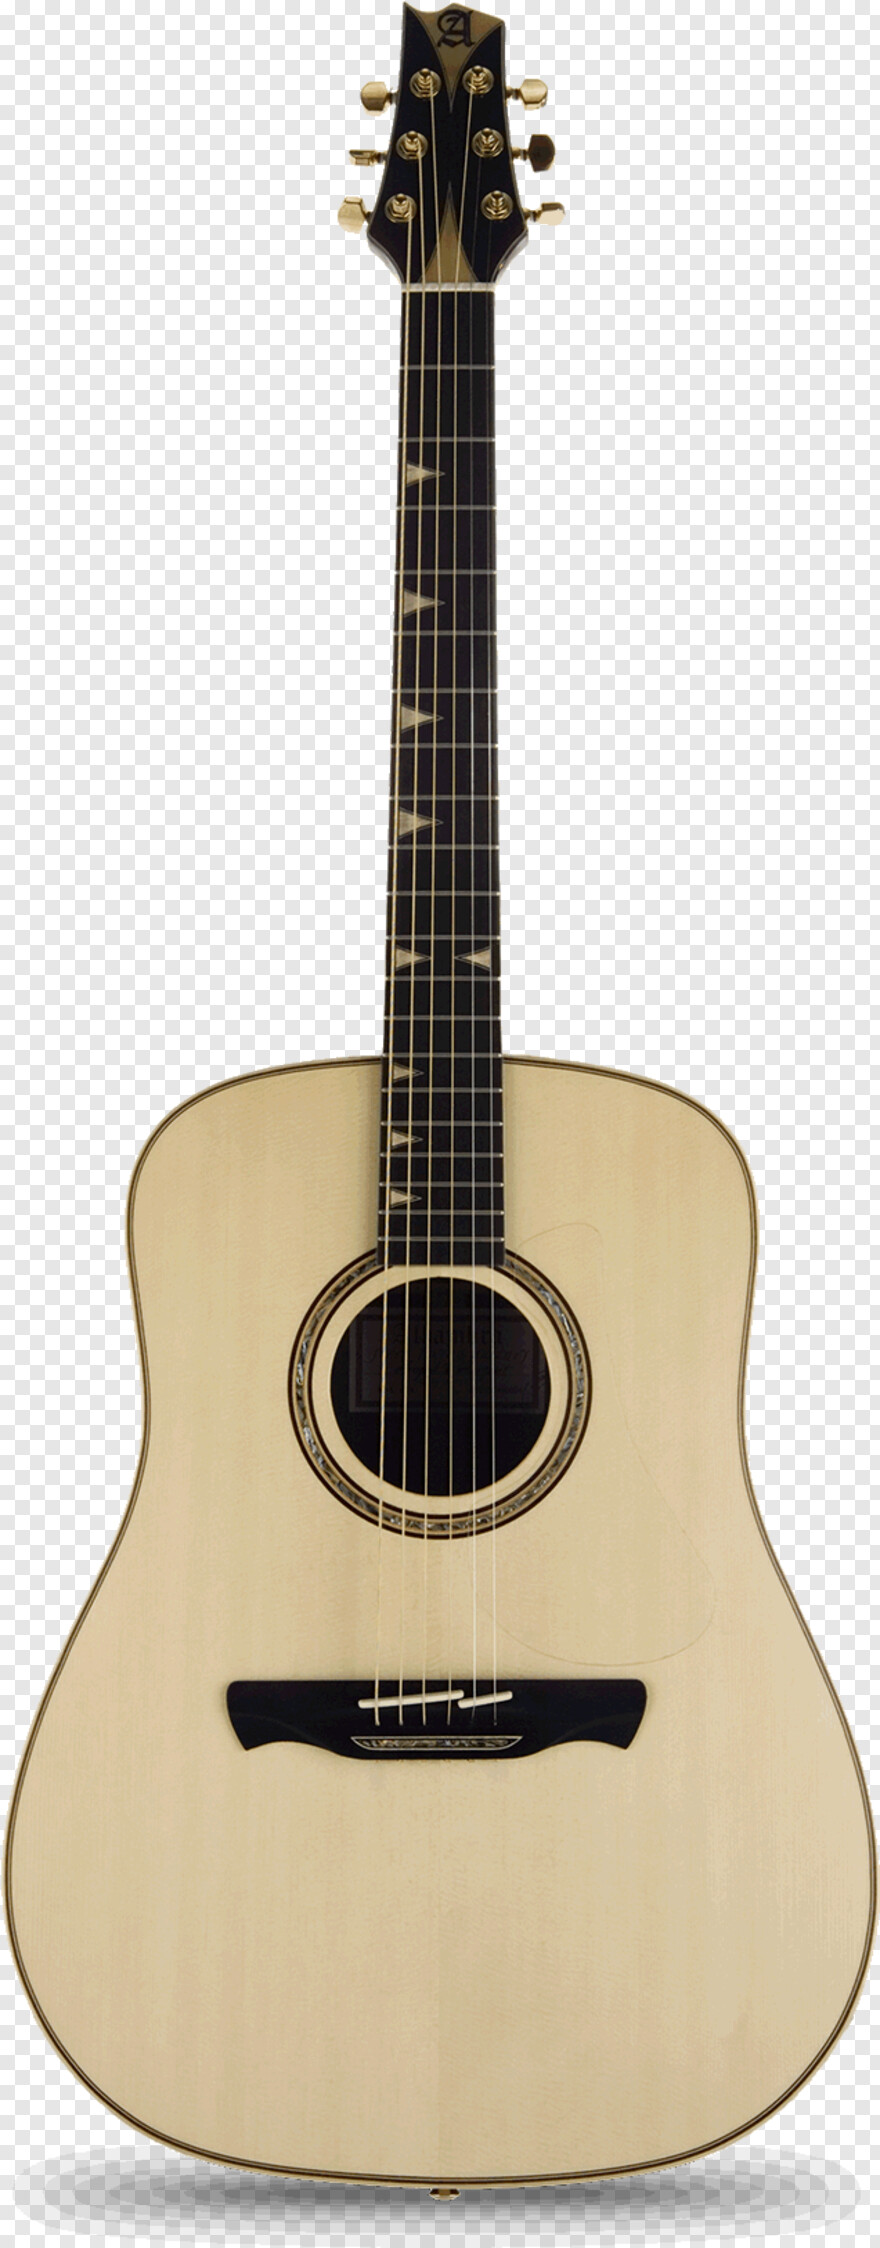 acoustic-guitar # 575622